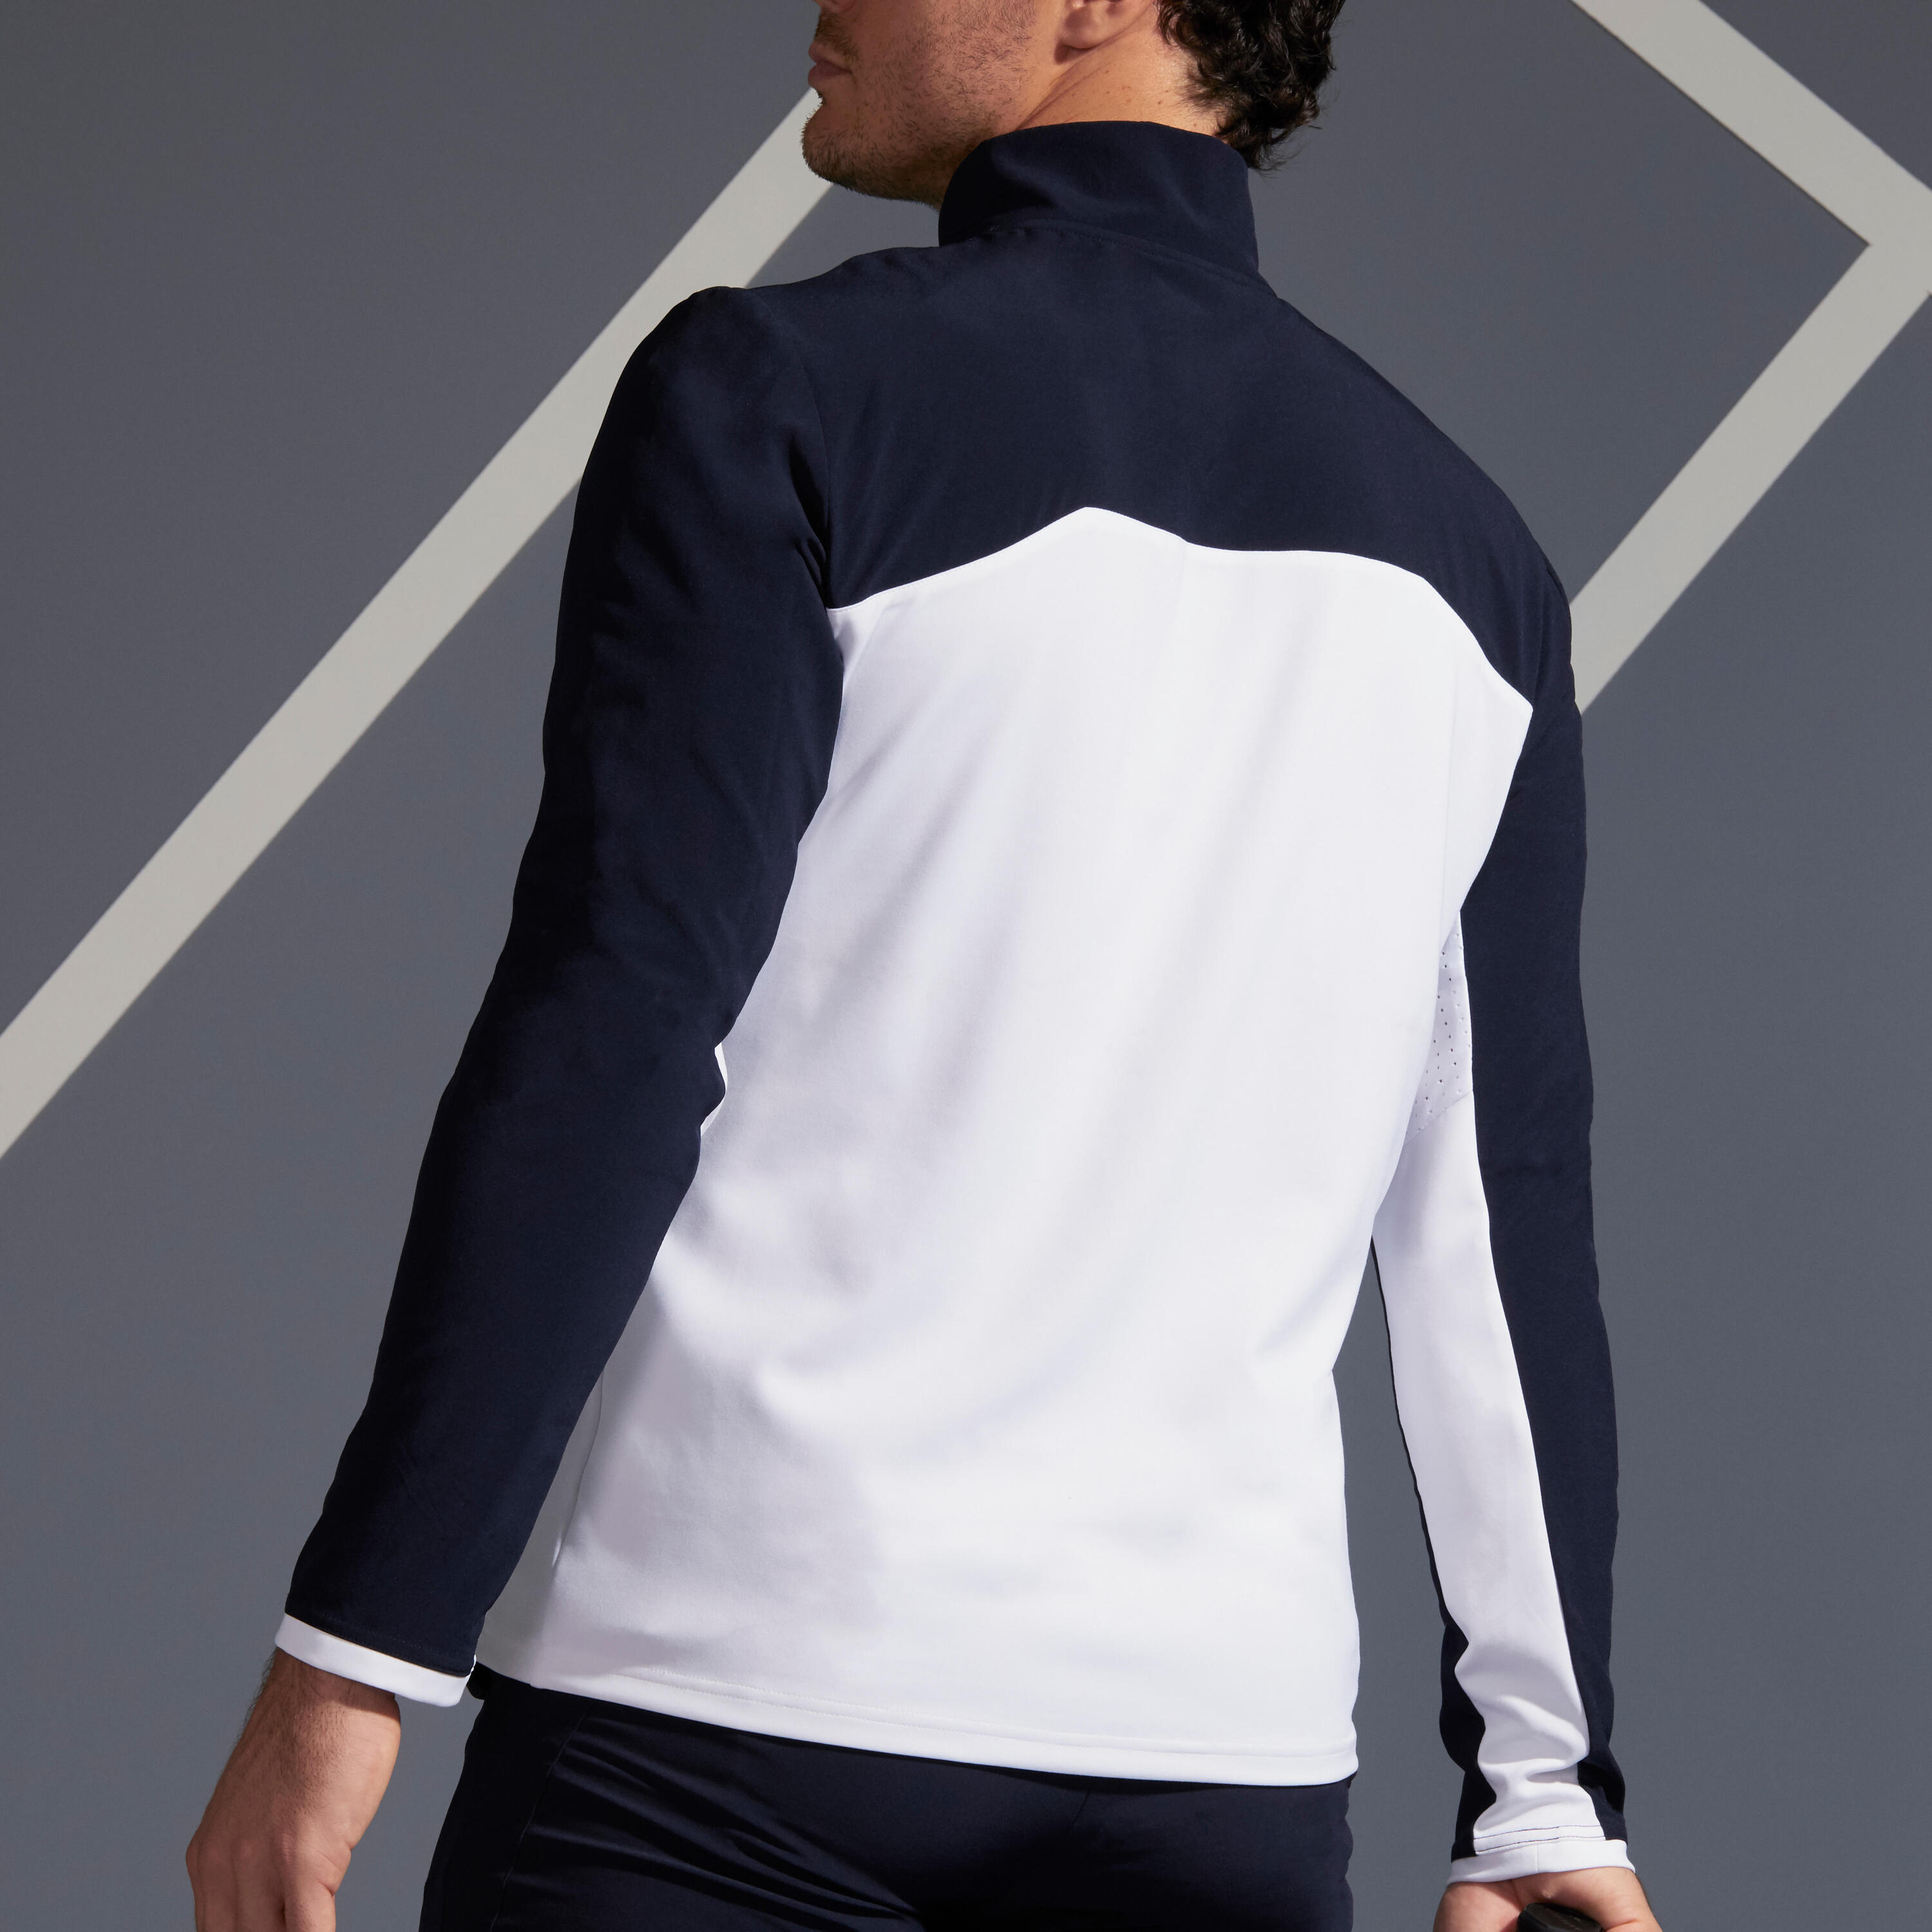 Men's Tennis Jacket Essential - Blue/White 3/10